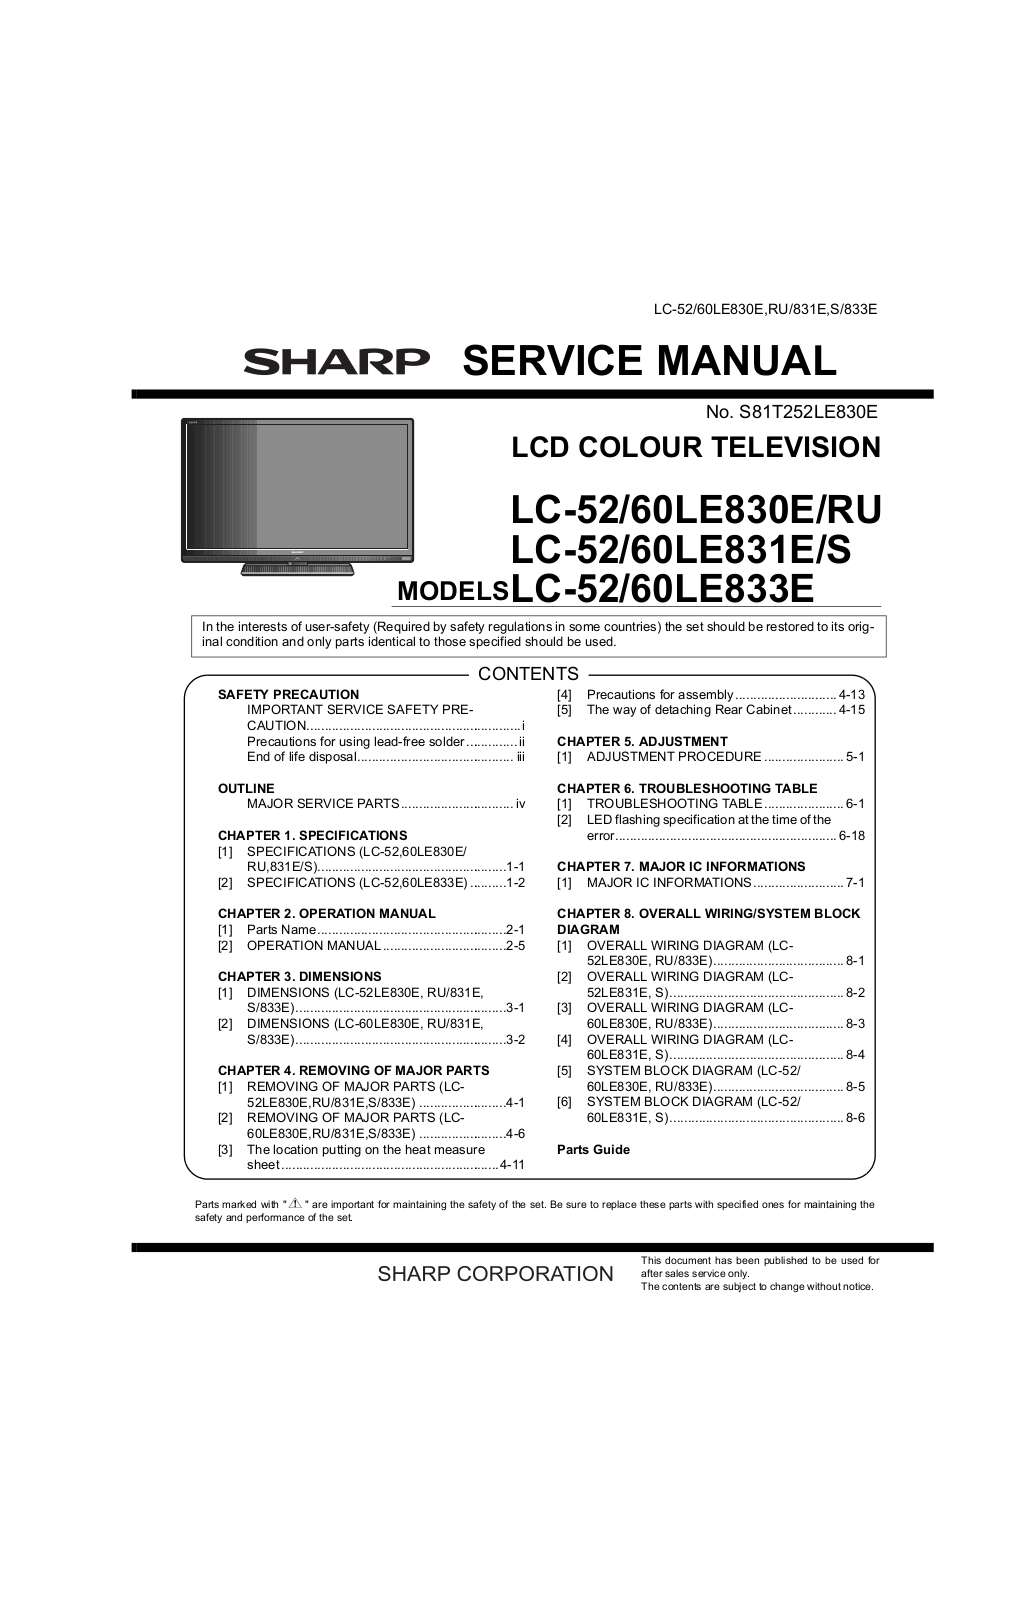 SHARP LC-52LE830E, LC-52LE830RU, LC-60LE830E, LC-60LE830RU, LC-60LE831E Service Manual